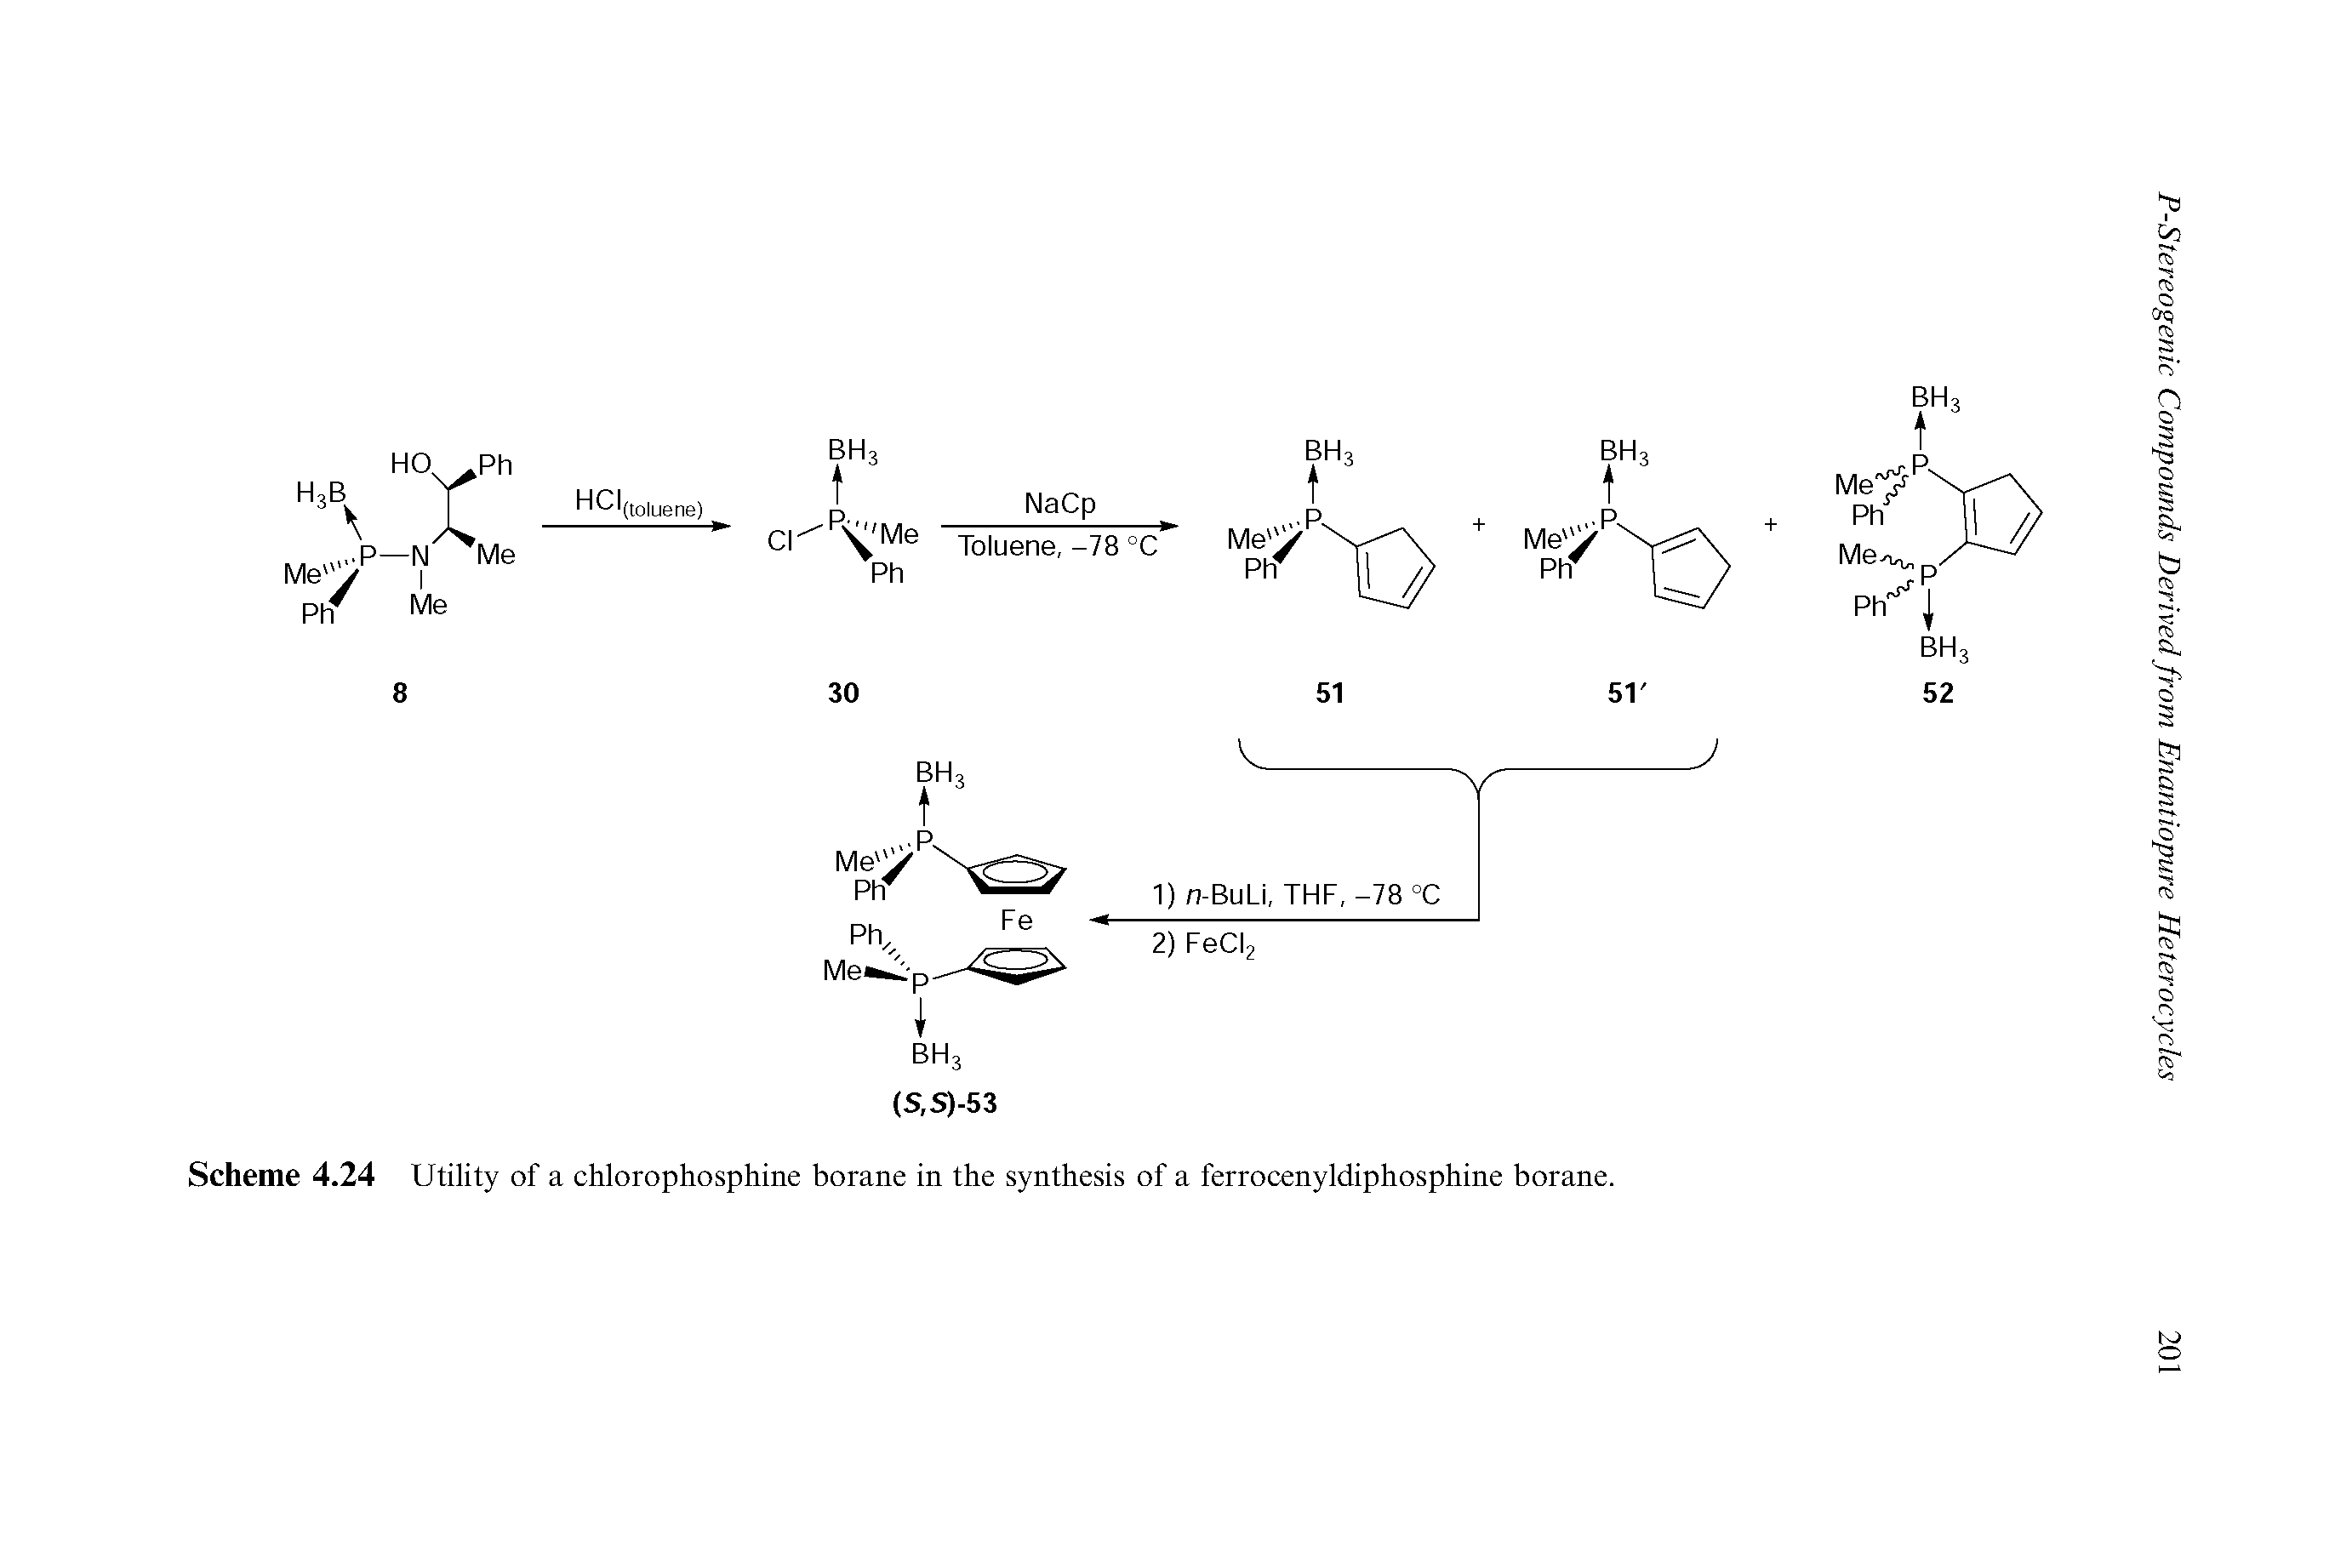 Scheme 4.24 Utility of a chlorophosphine borane in the synthesis of a ferrocenyldiphosphine borane.